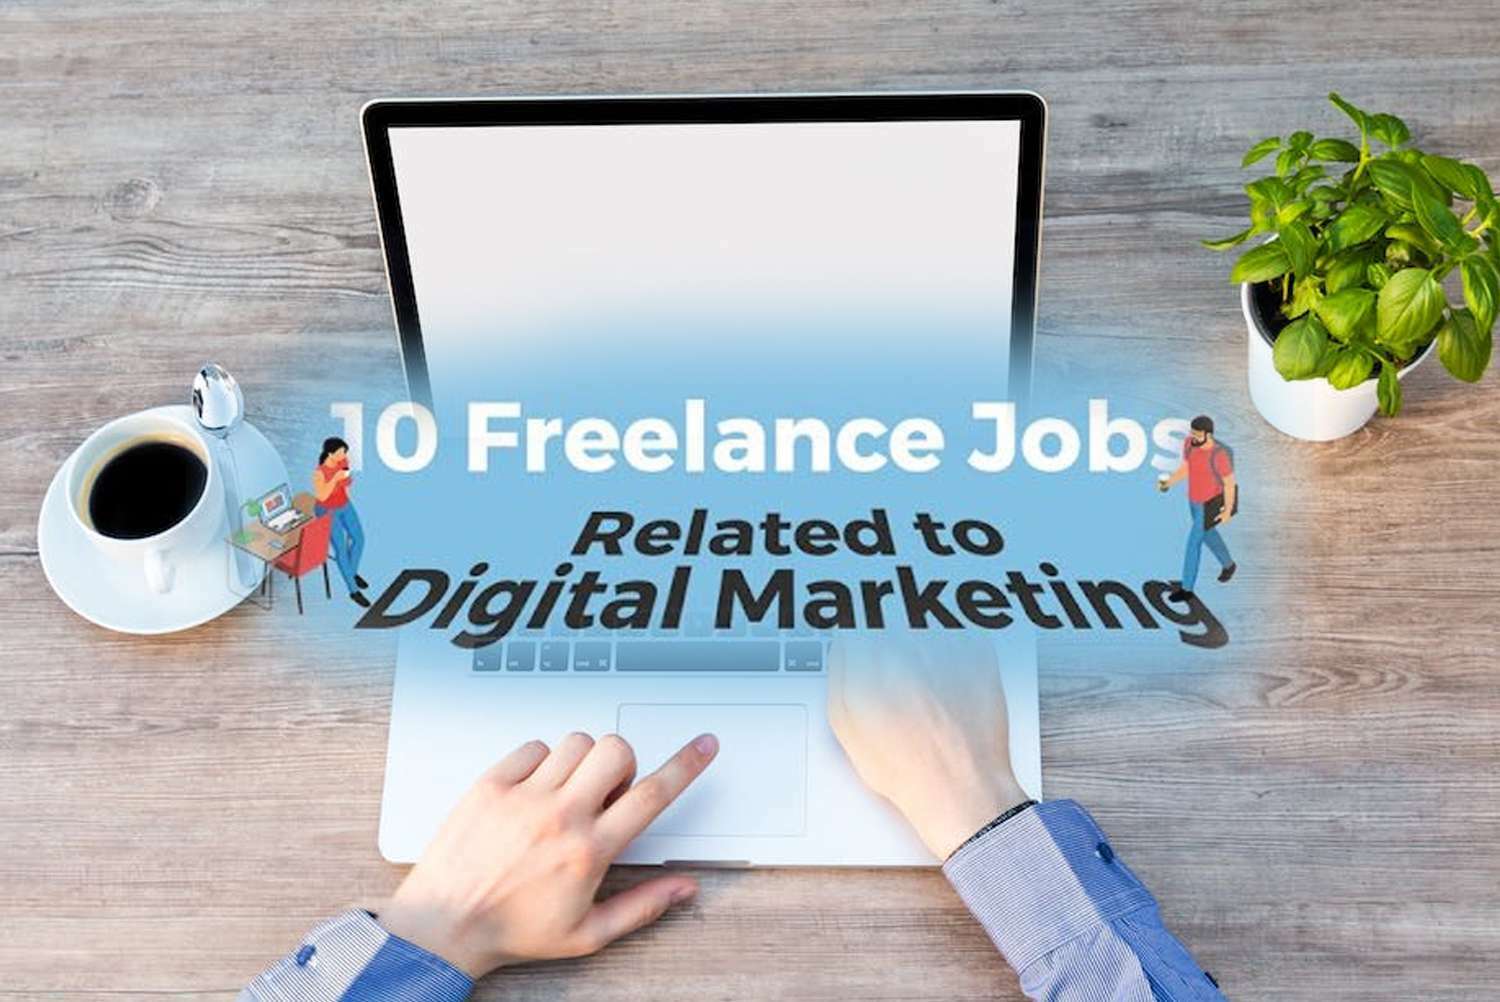 Freelance Digital Marketing Jobs from Home